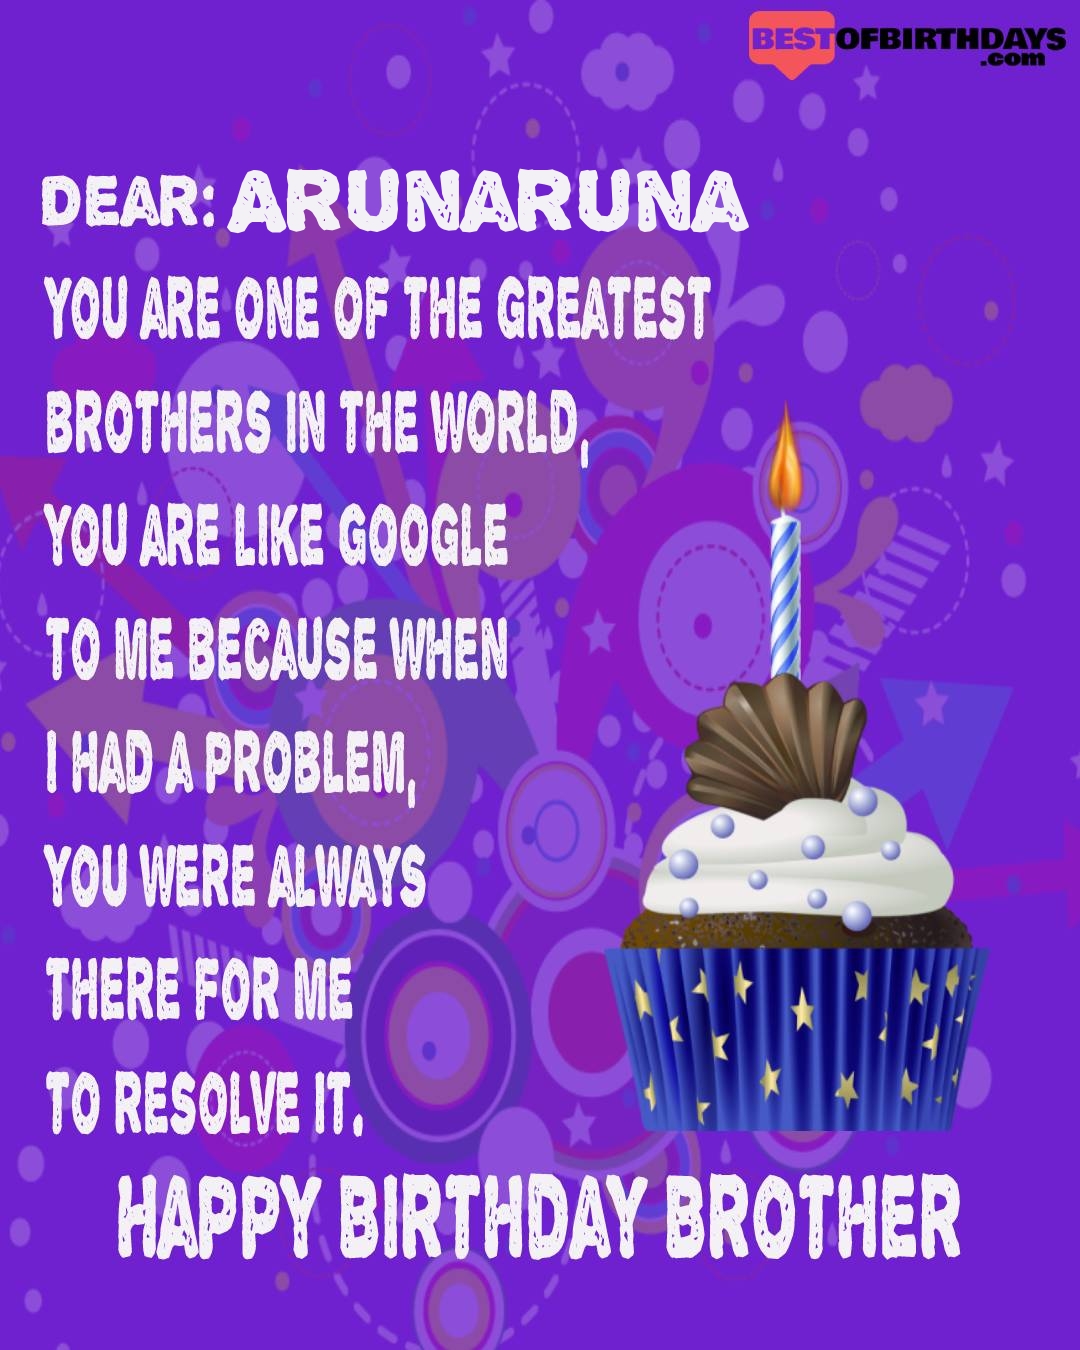 Happy birthday arunaruna bhai brother bro